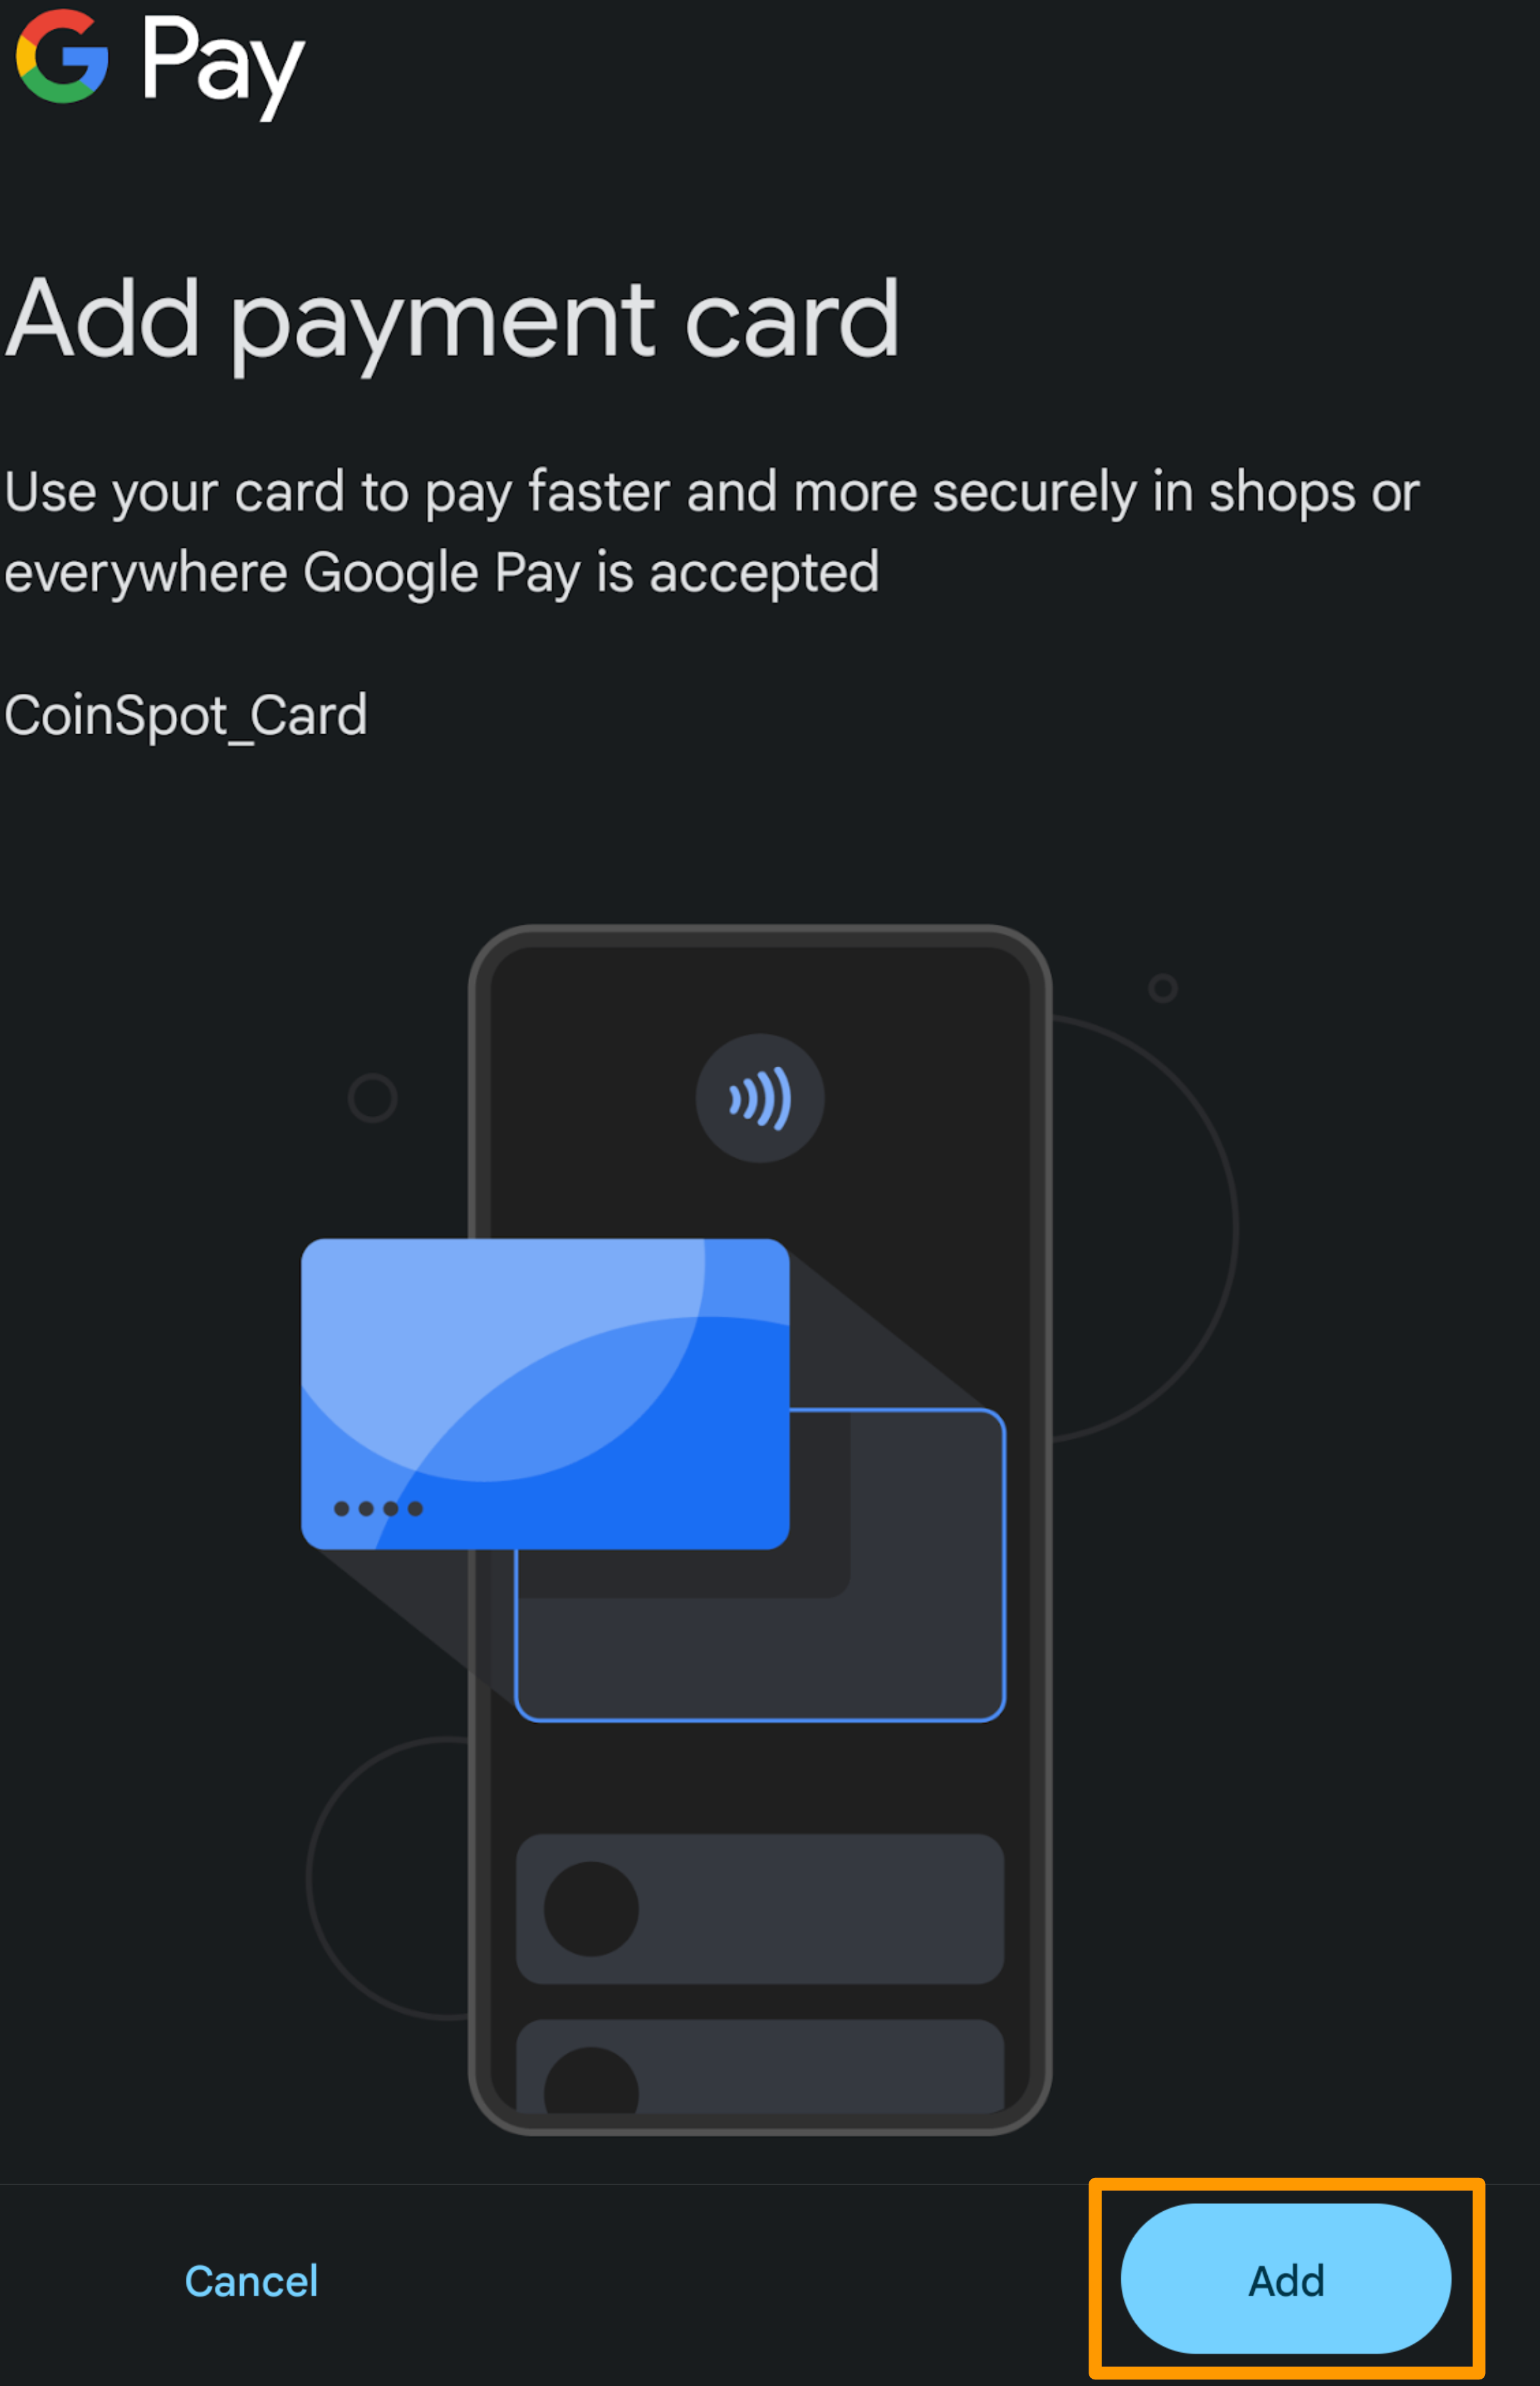 CS_Card_-_Google_Pay_-_Add_Payment_Card.png